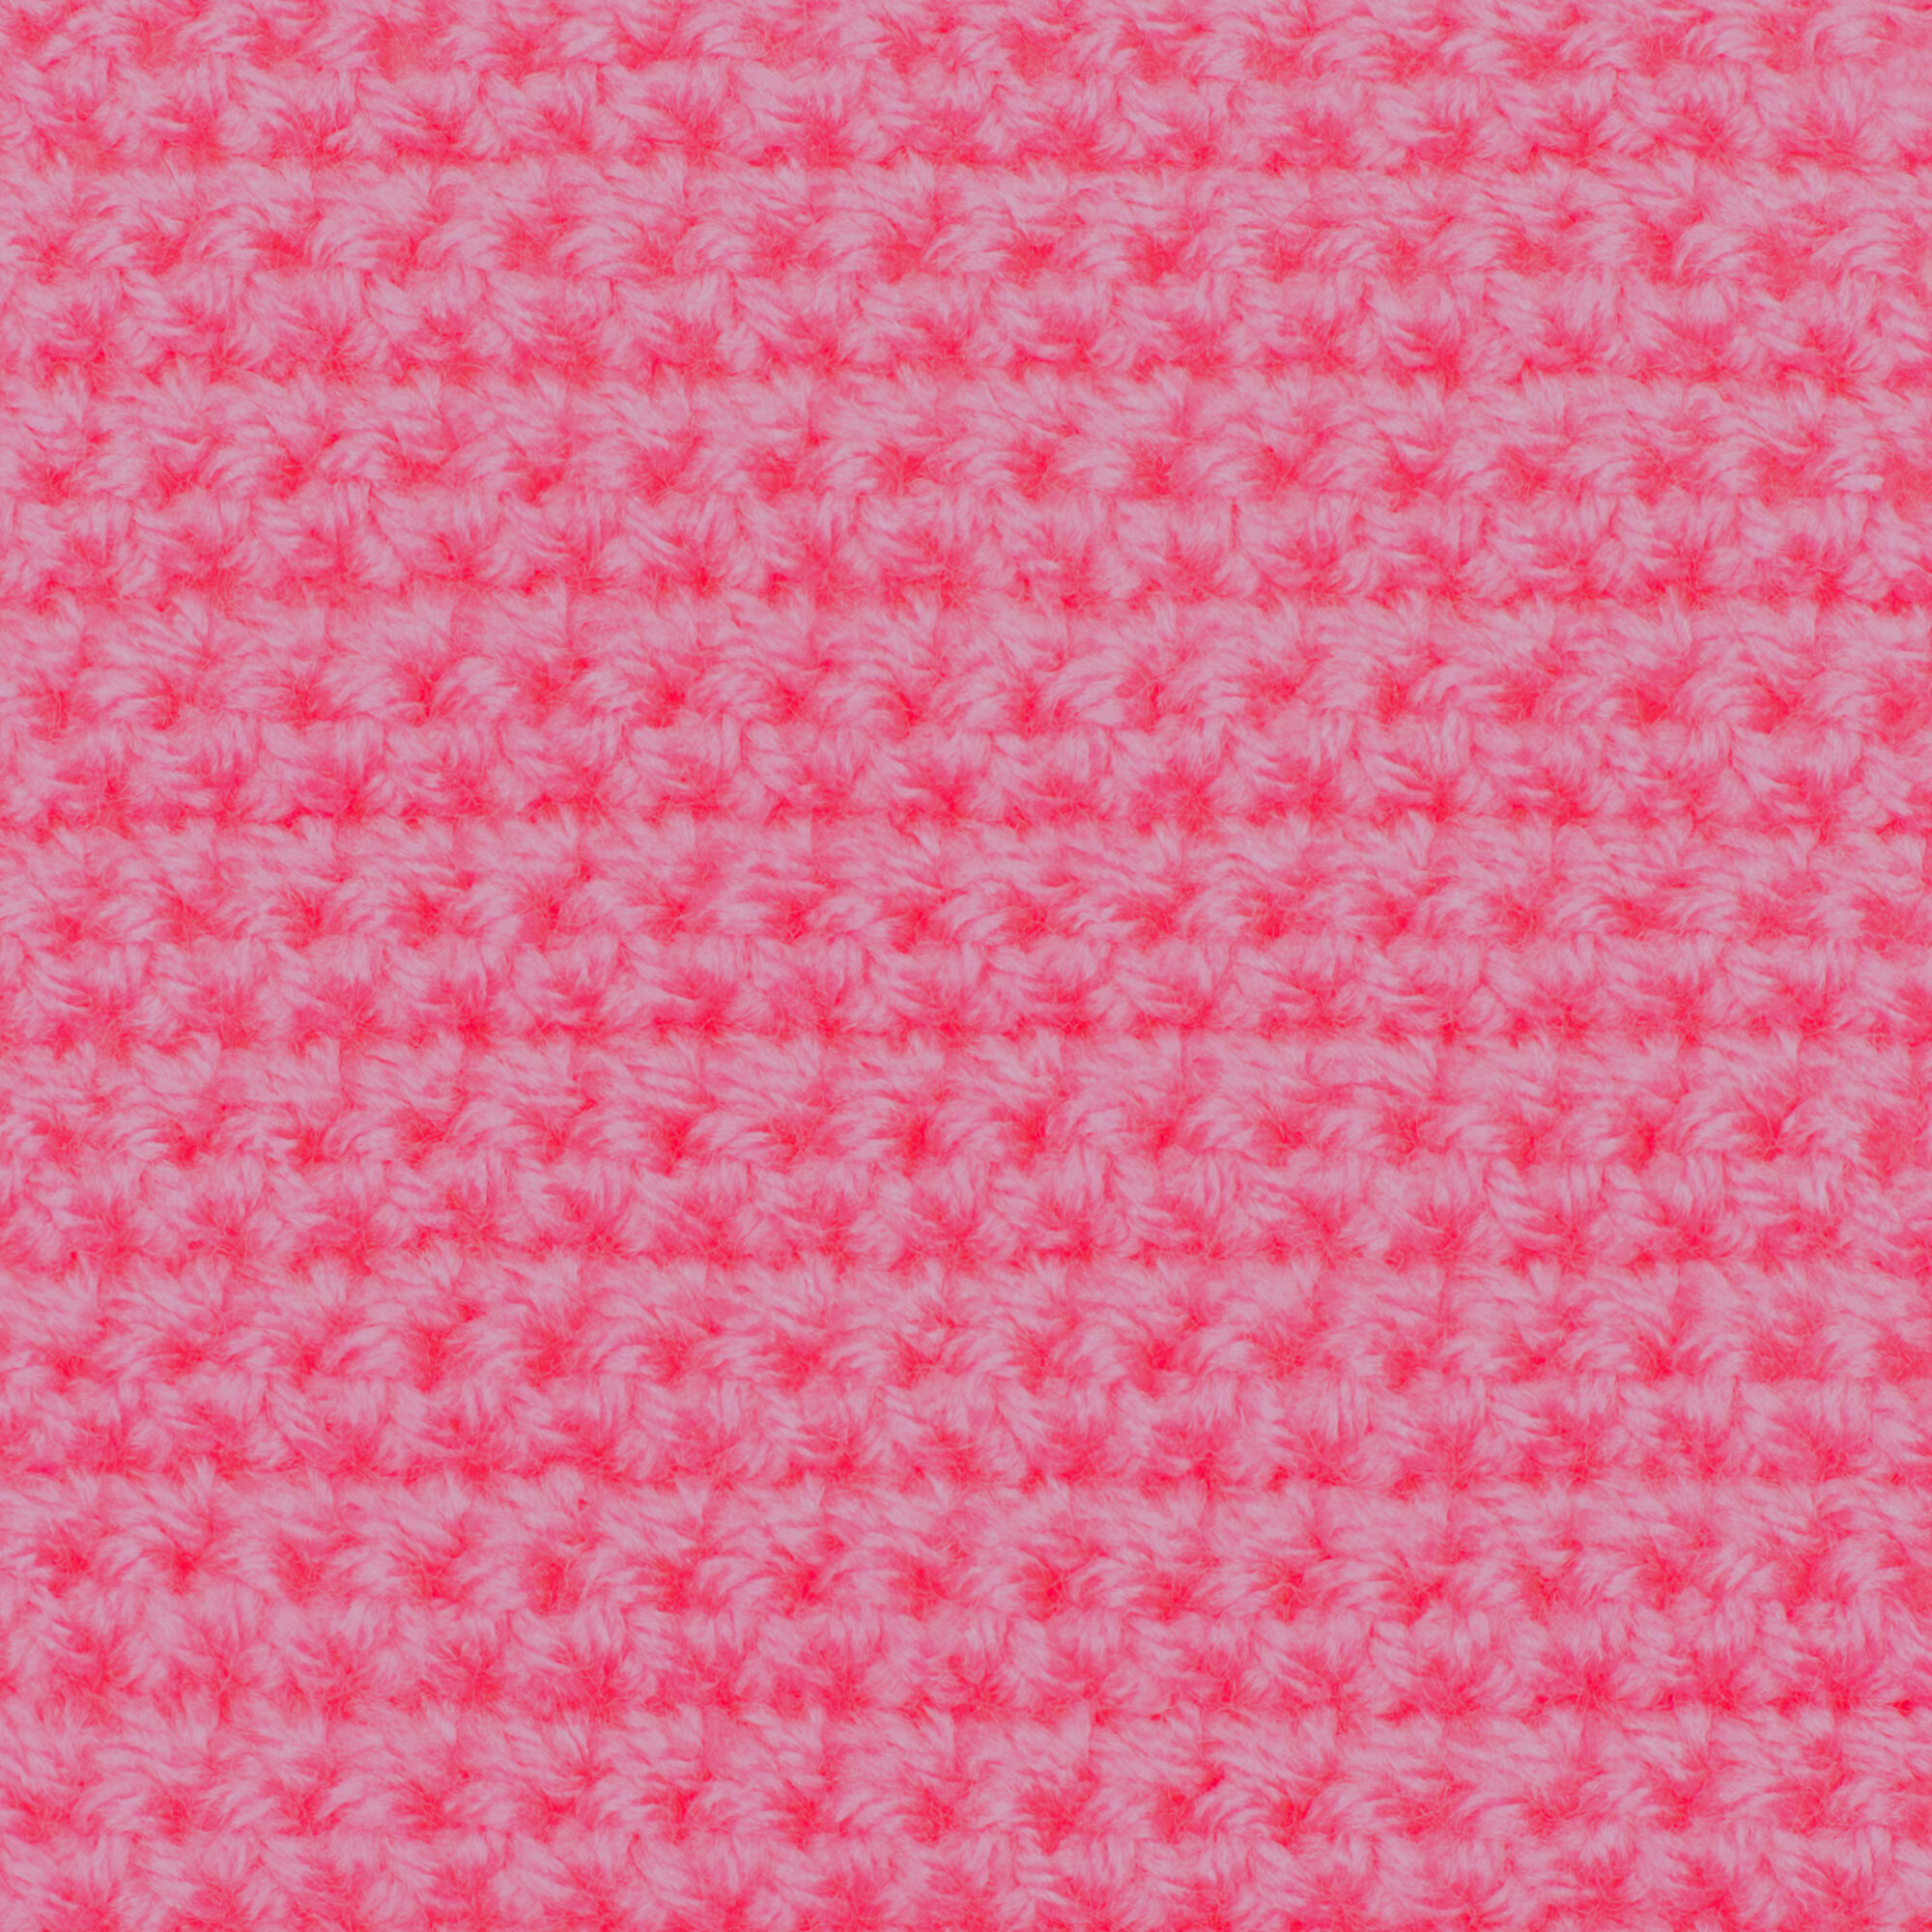 Red Heart Super Saver Medium Acrylic Pink Yarn, 364 yd - image 4 of 18